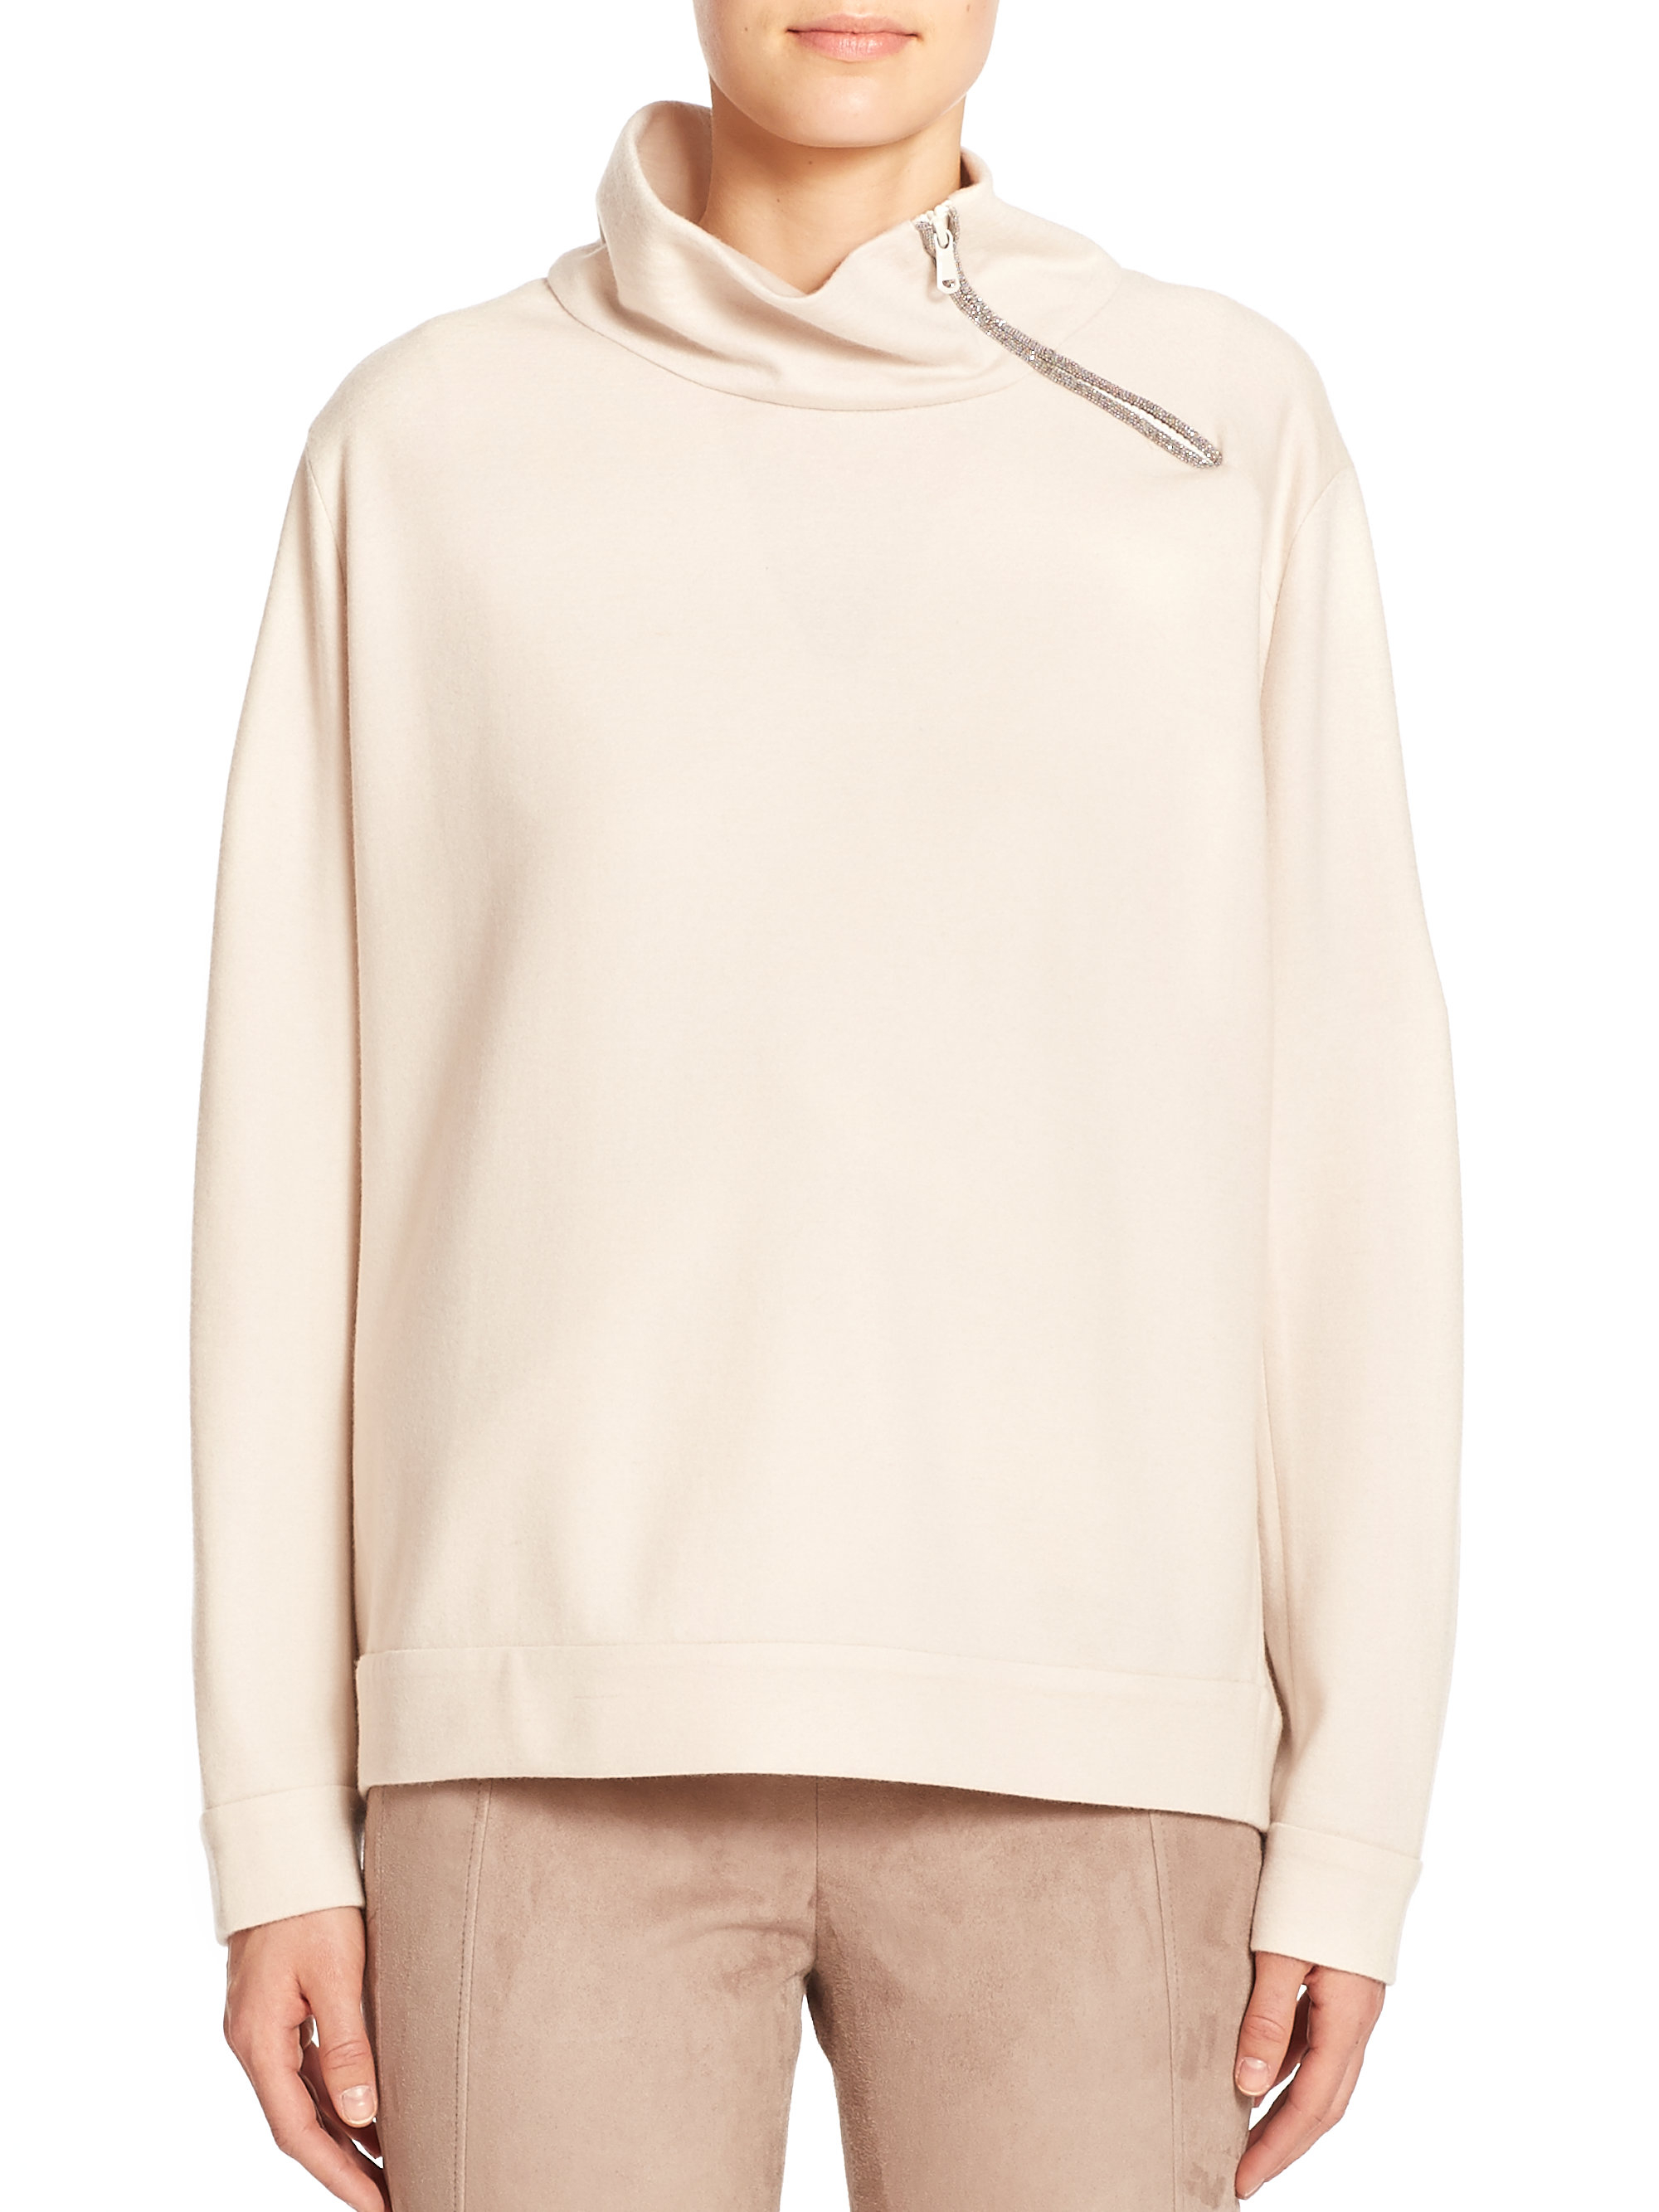 Lyst - Brunello Cucinelli Zip-neck Cashmere Sweater in White